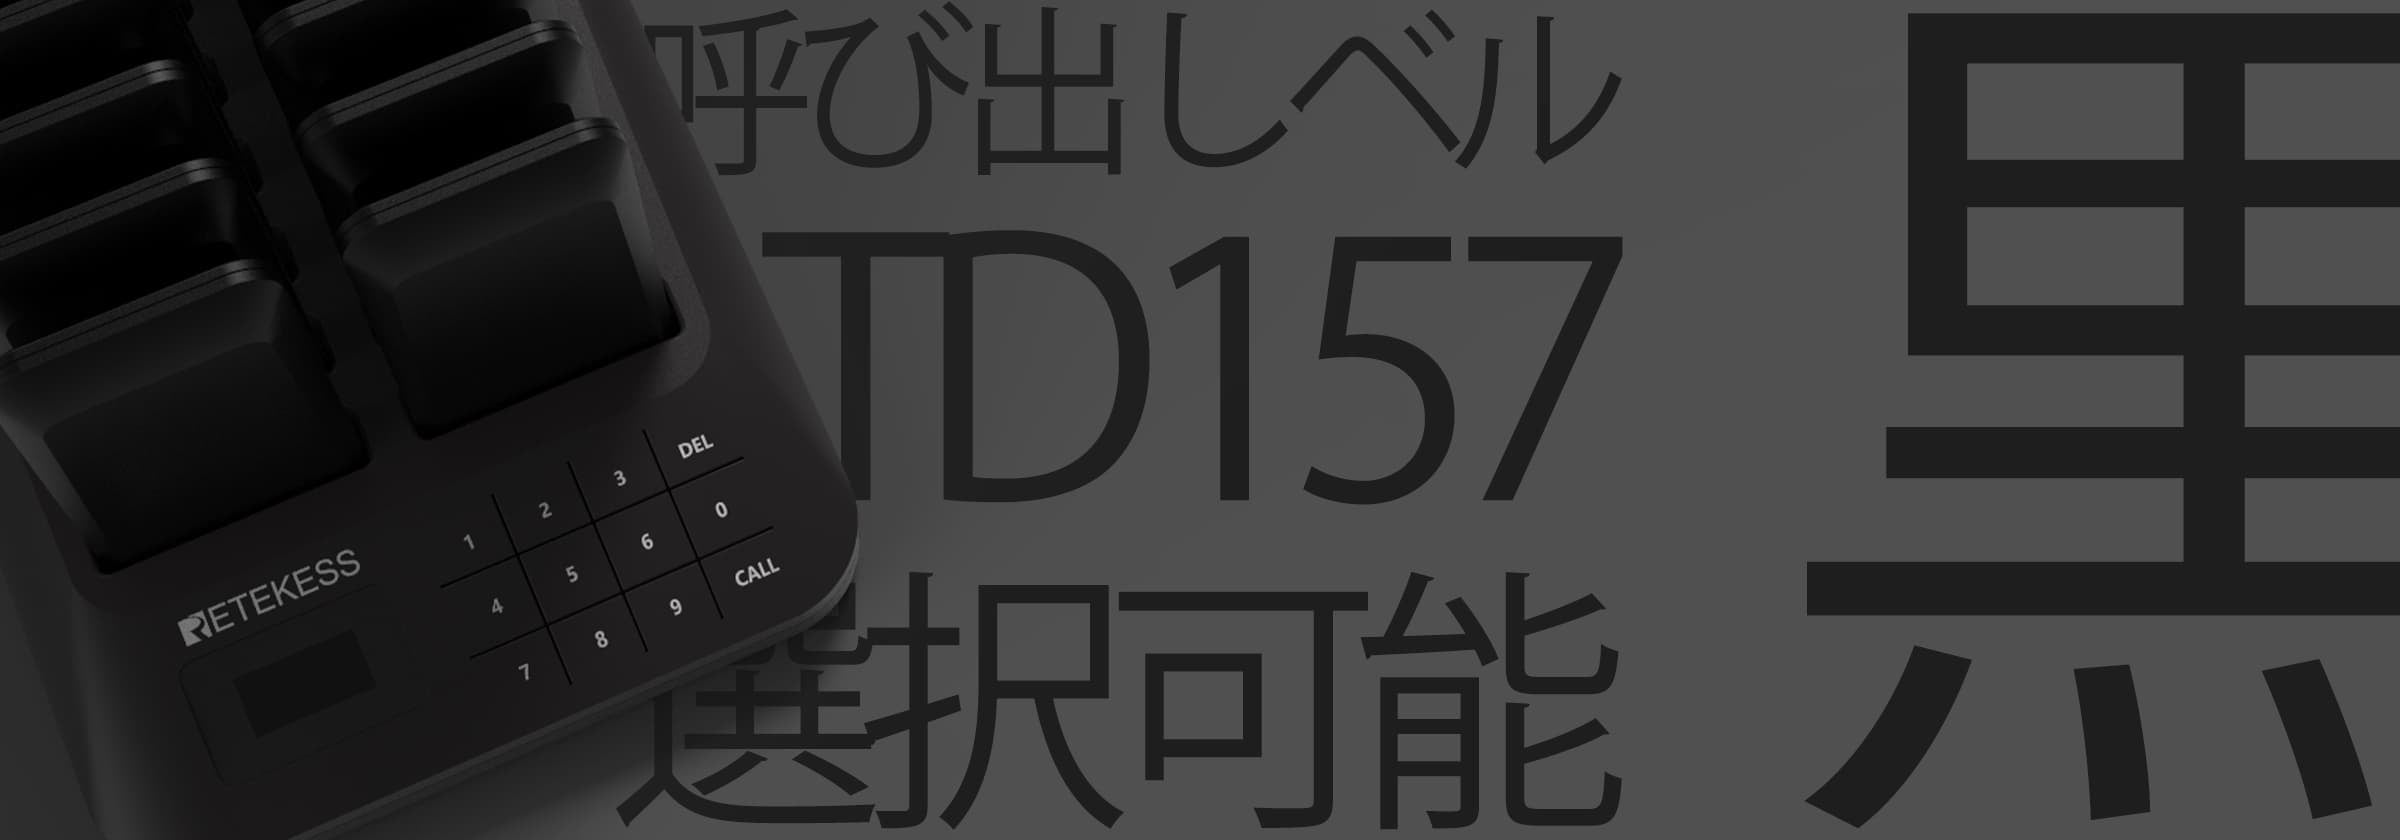 TD157 呼び出しベル 黒い